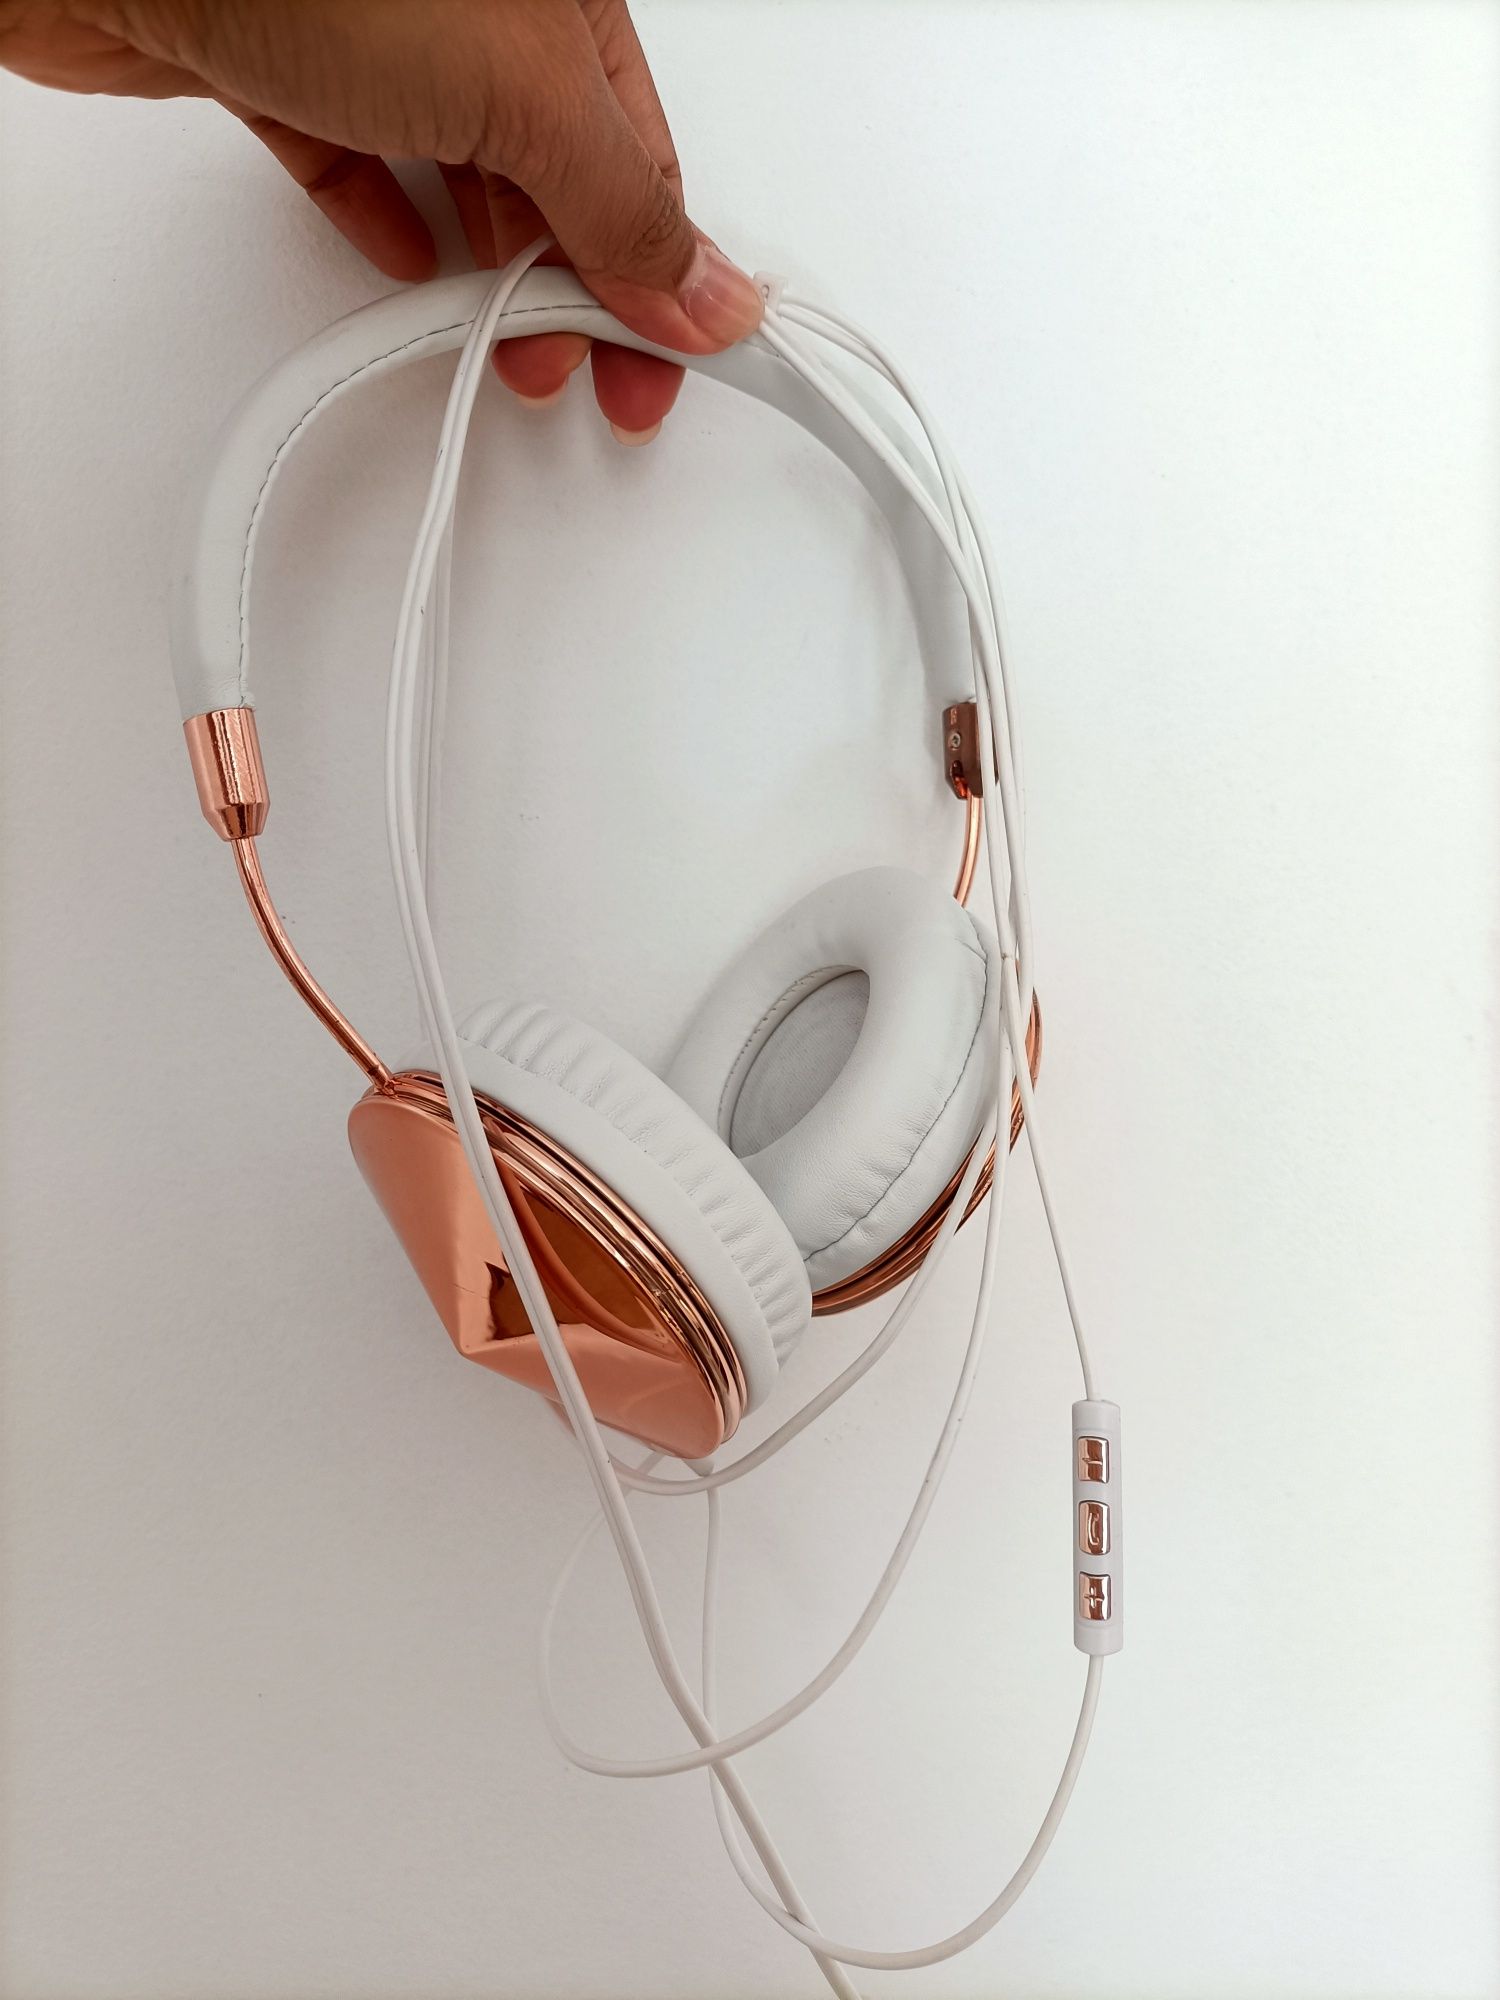 Headphones/auscultadores